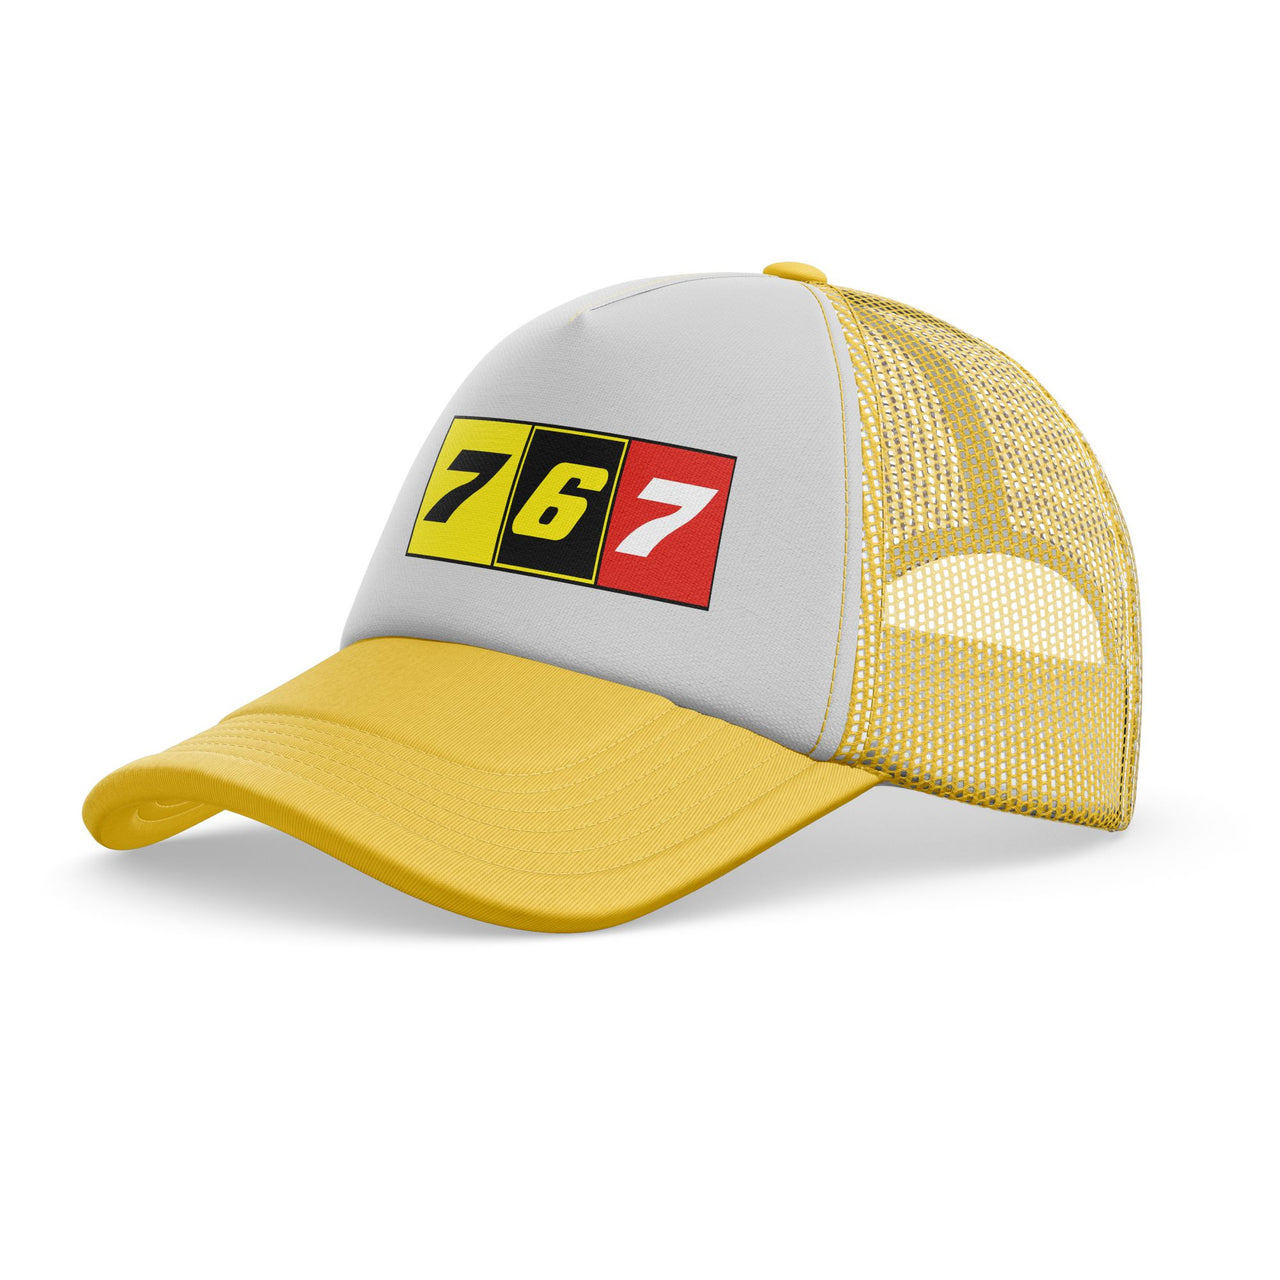 Flat Colourful 767 Designed Trucker Caps & Hats